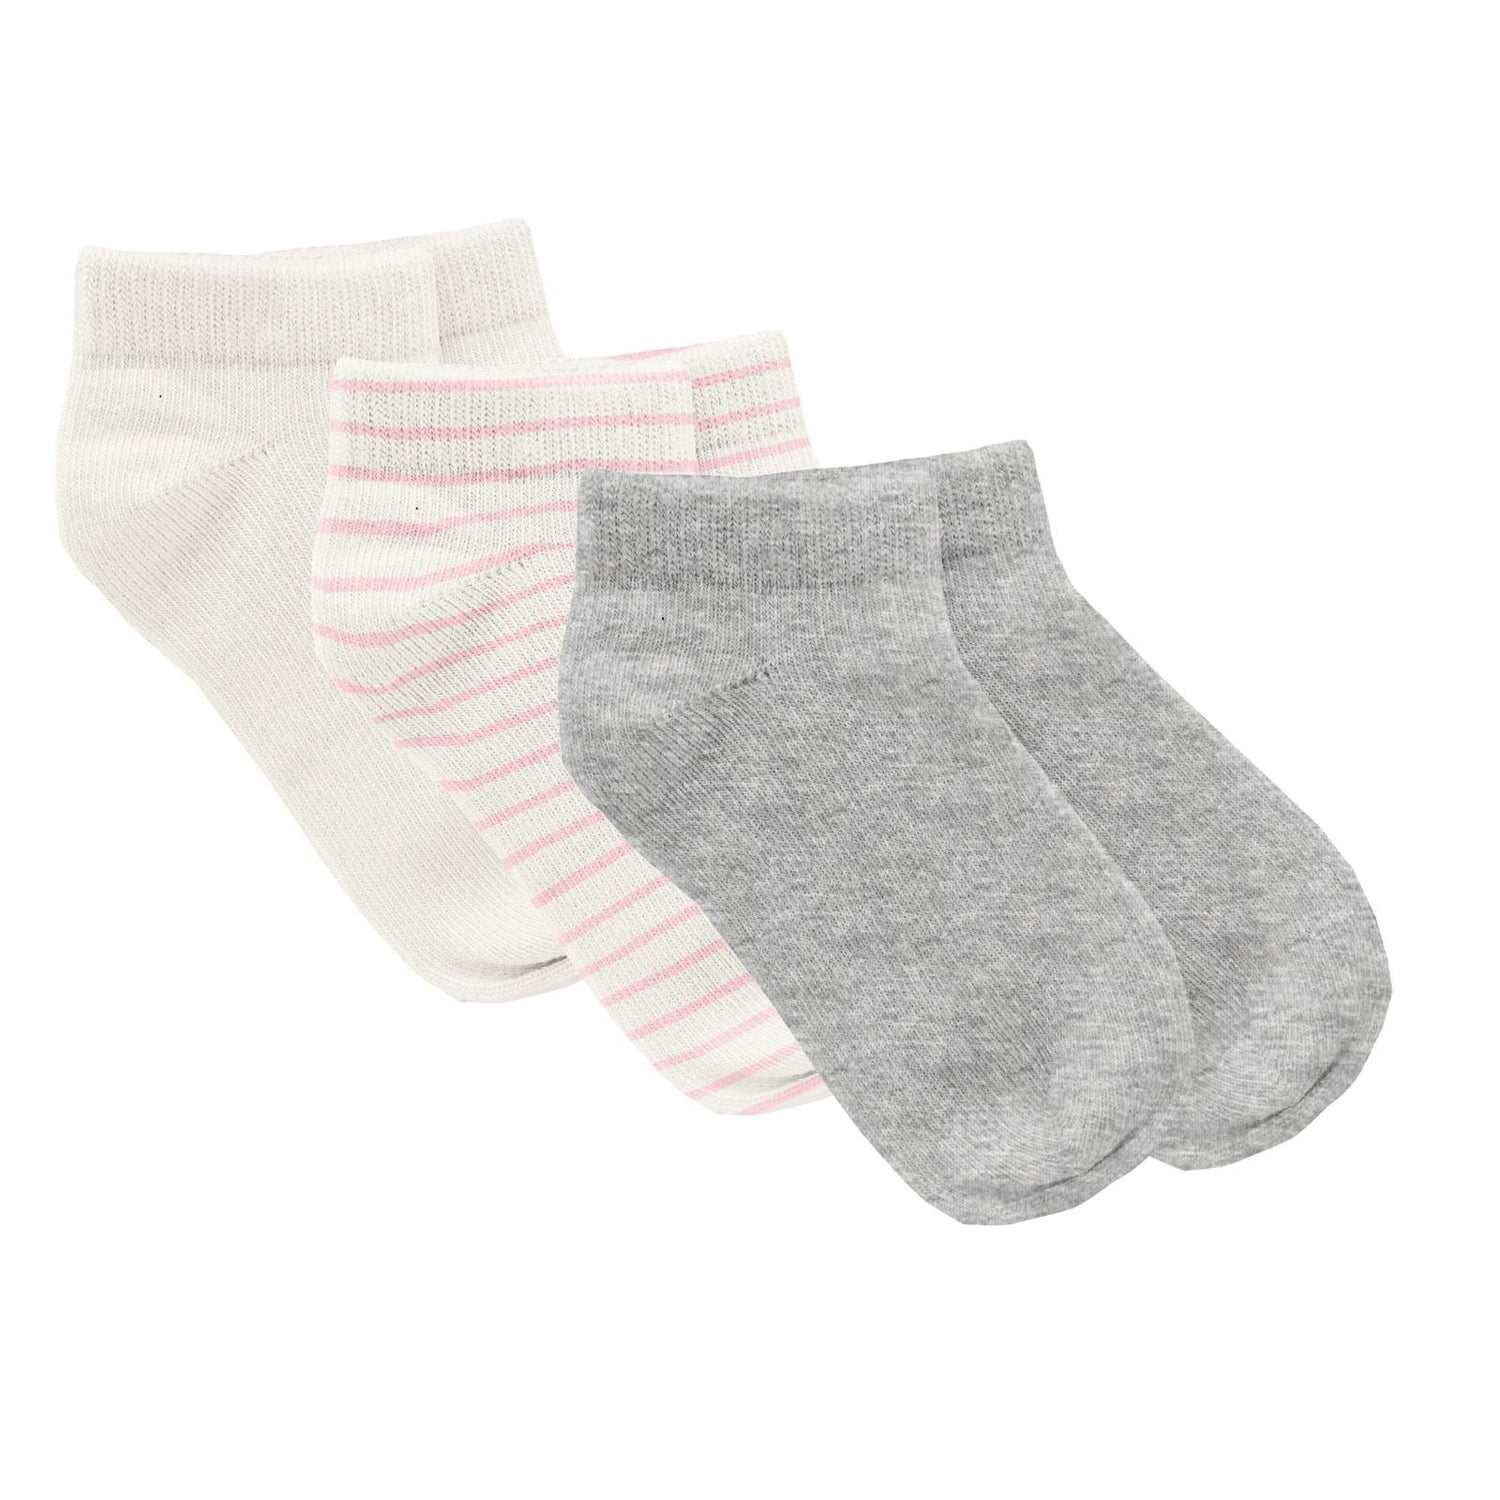 Print Ankle Socks Set of 3 in Heathered Mist, Lotus Sweet Stripe & Natural